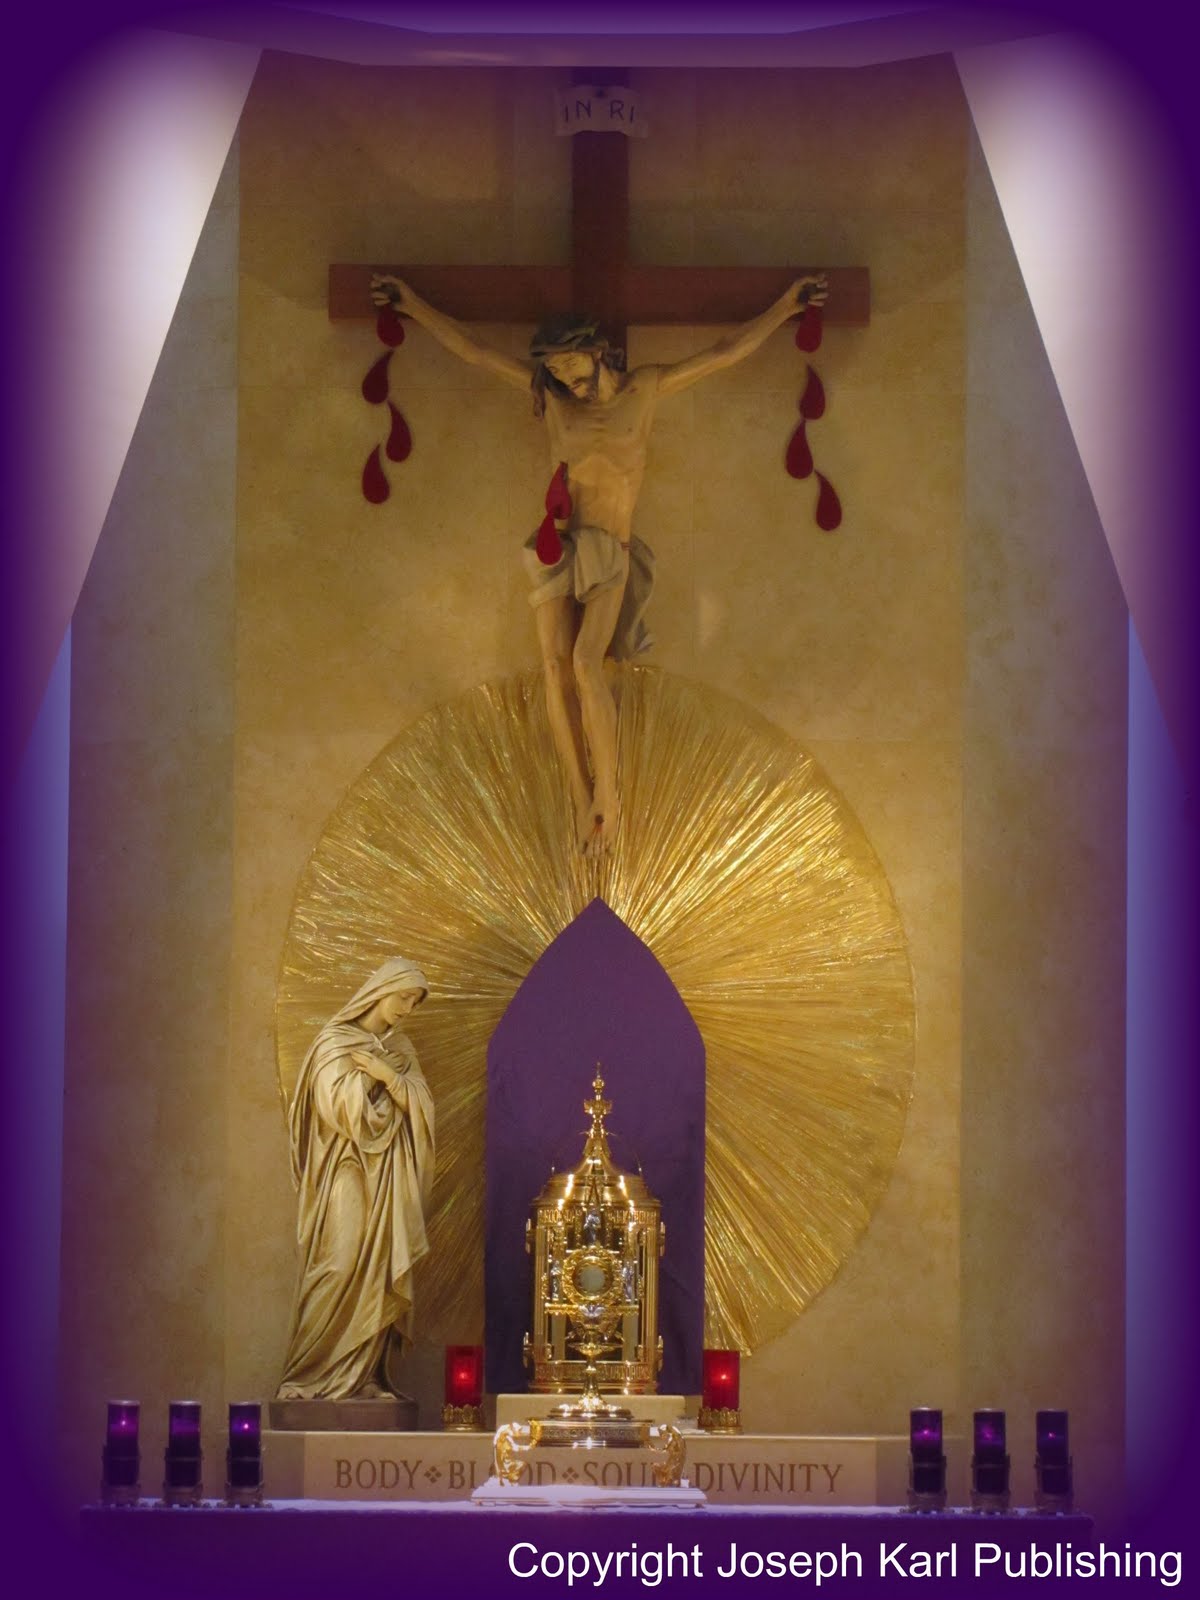 Joseph Karl Publishing's Blog: Eucharistic Adoration During Lent